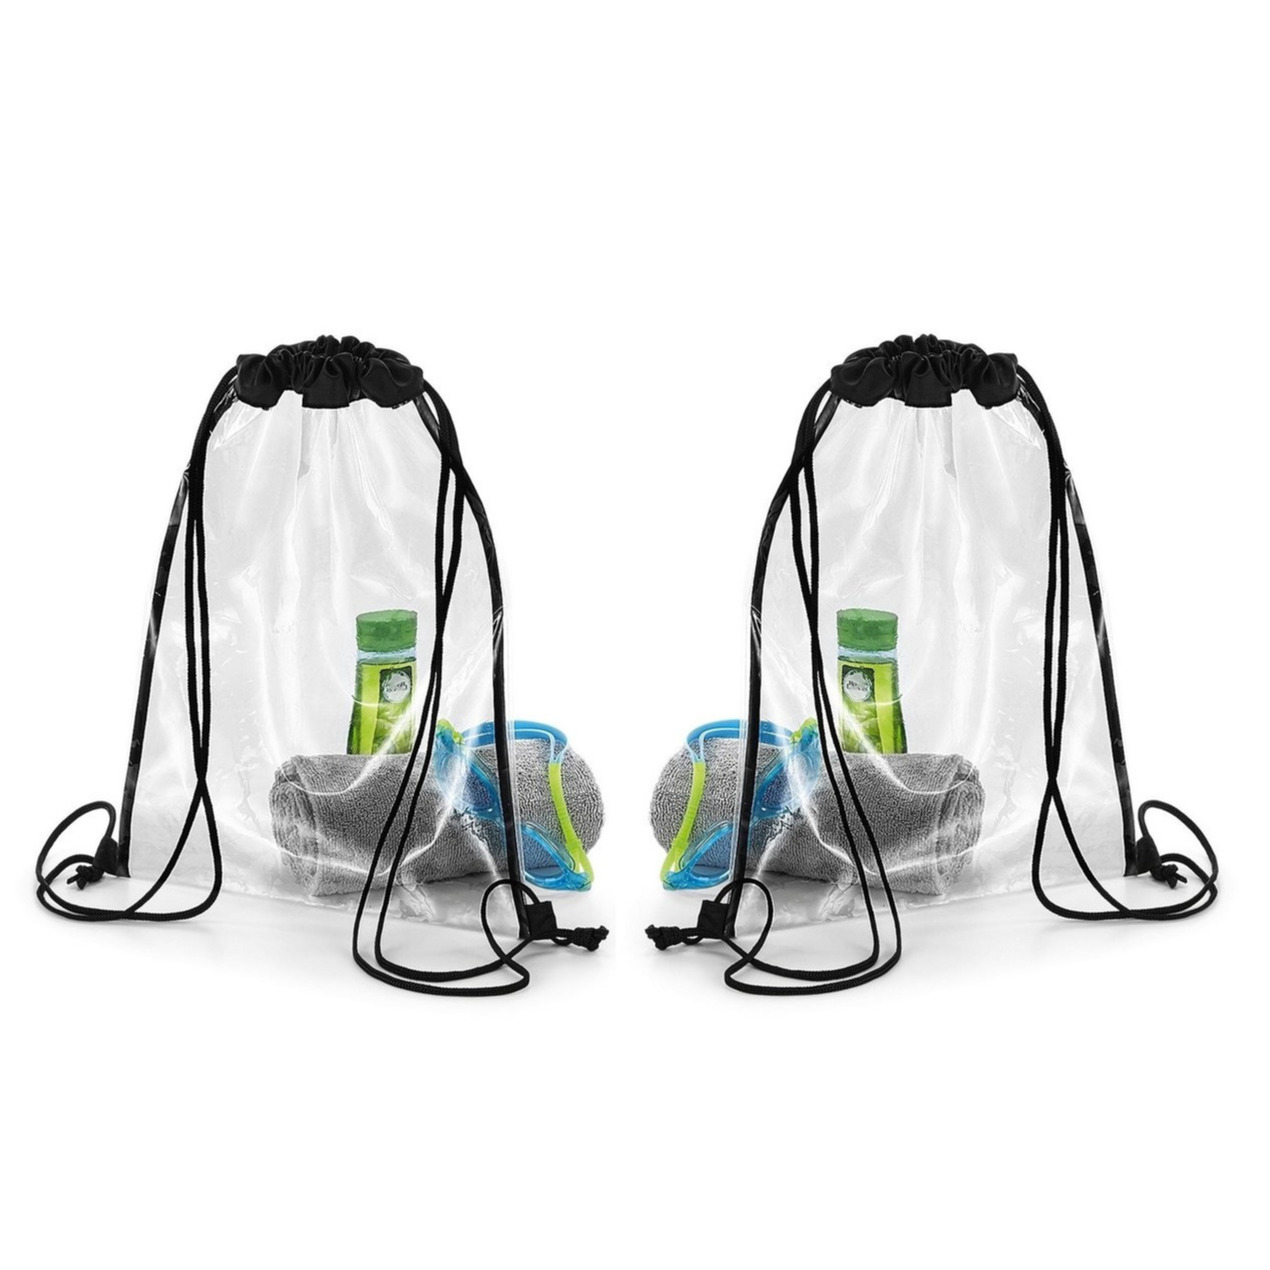 2x stuks transparante gymtasjes/rugtasjes 33 x 45 cm - Gymtassen/rugtassen/rugzakken/zwemtassen doorzichtig